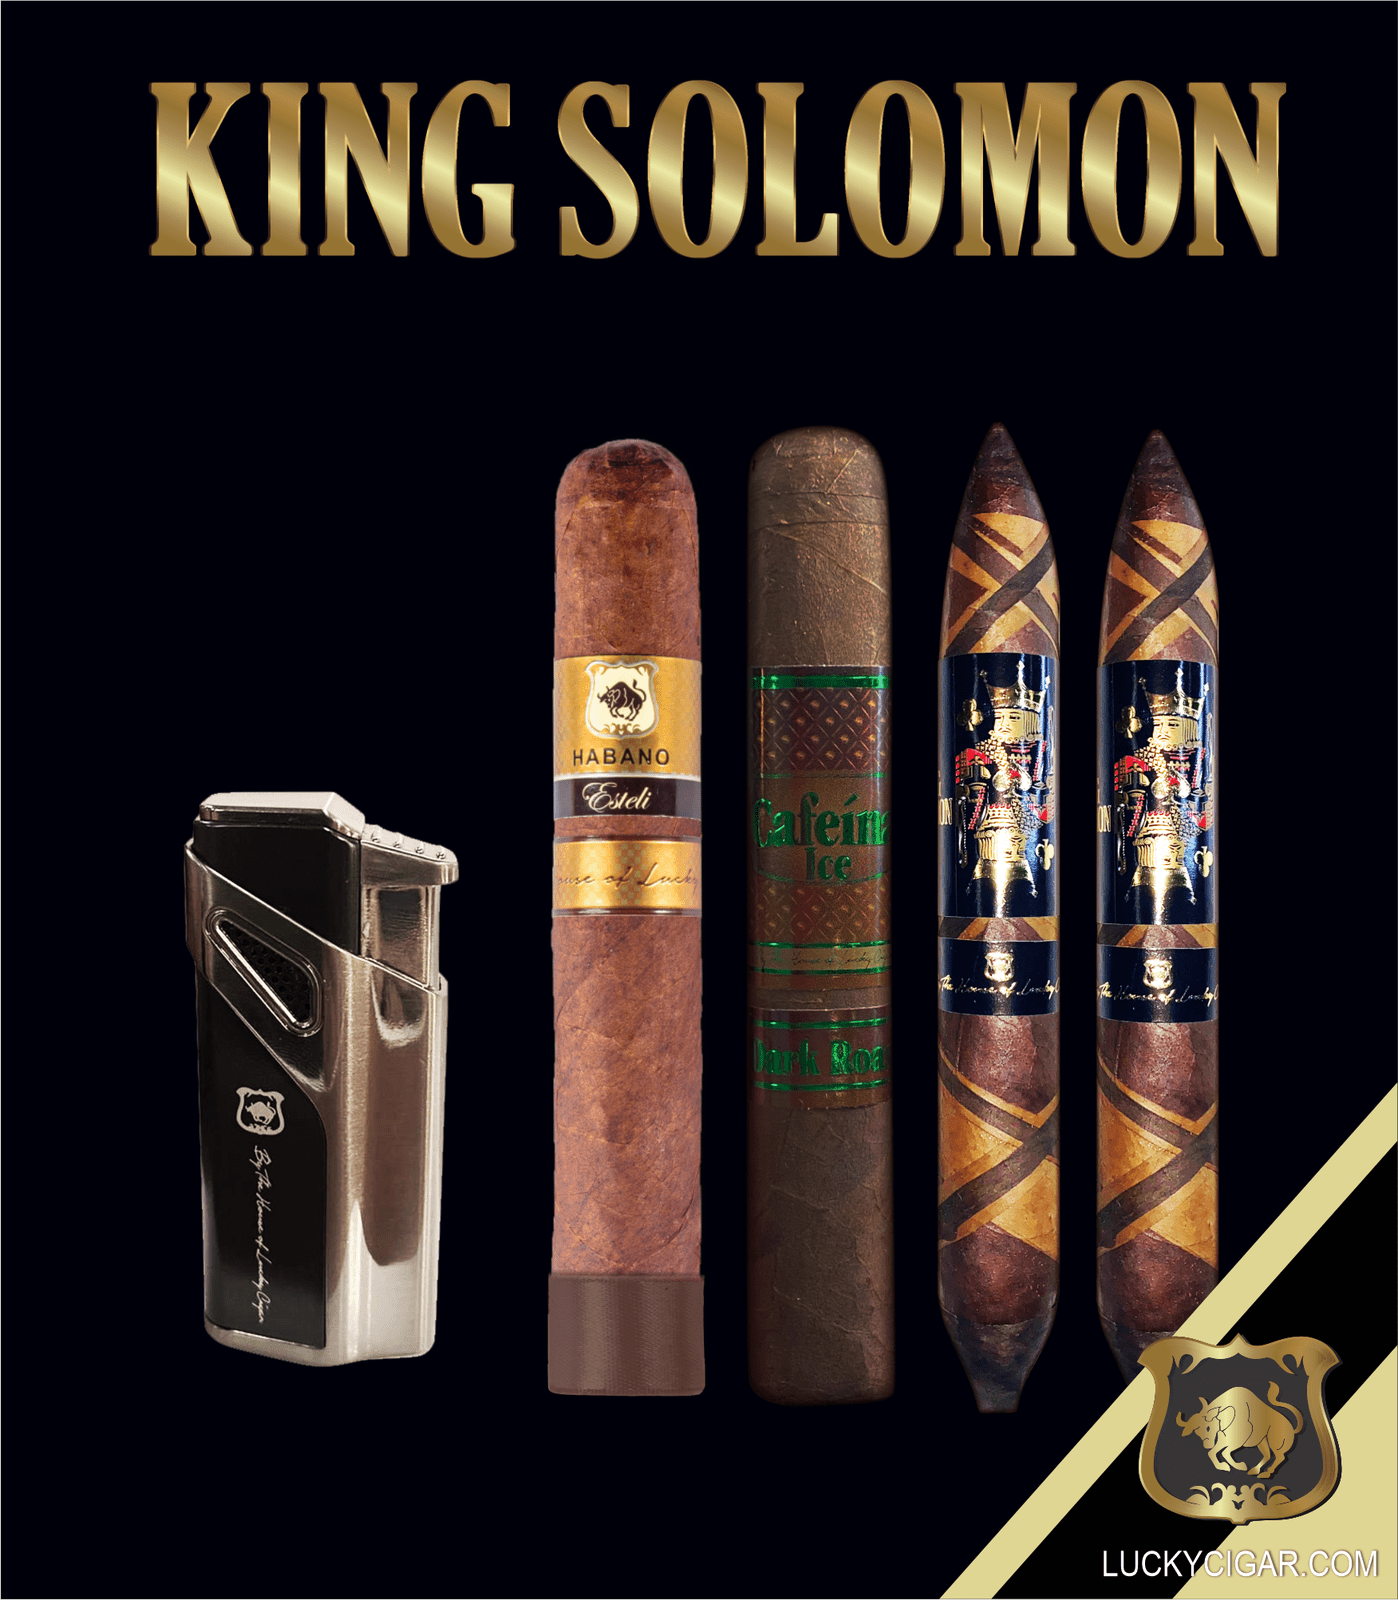 From The King Solomon Series: 2 Solomon 7x60 Cigars, 1 Cafeina Dark 5x58, 1 Habano Esteli 6x60 with Torch Lighter